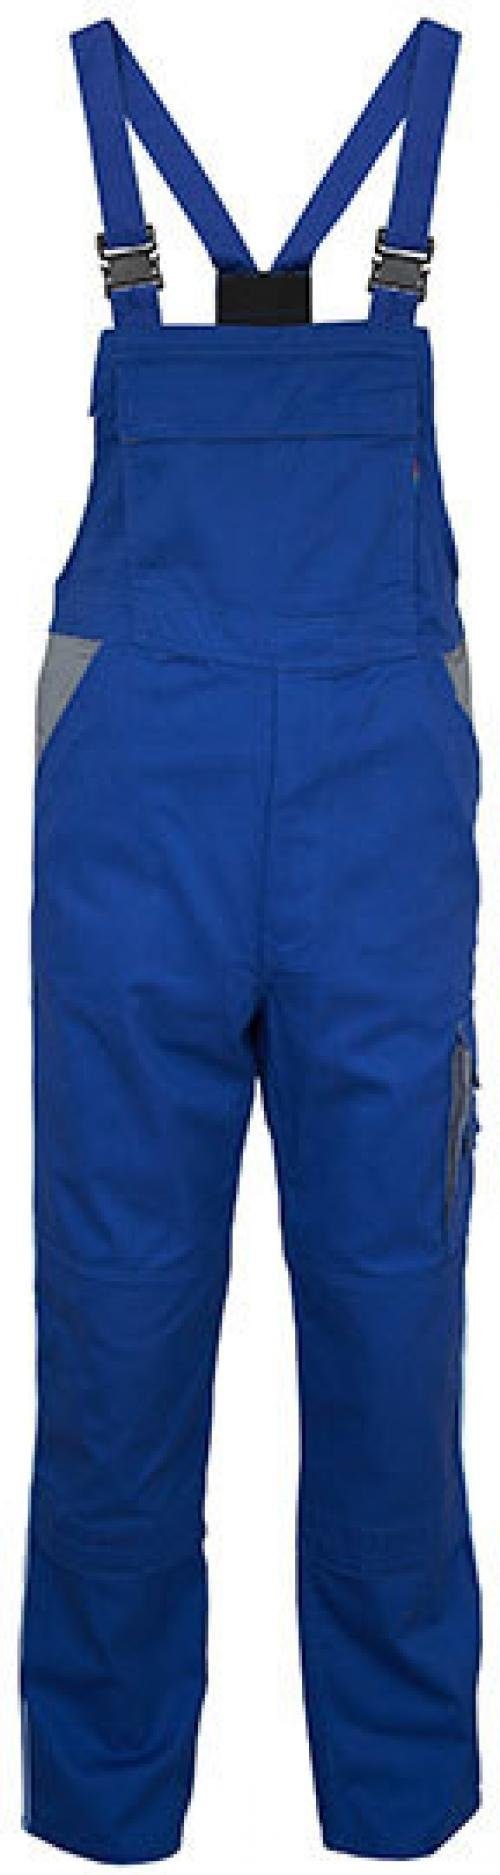 Carson Classic Workwear Arbeitslatzhose Contrast Bib Pants Latzhose / Bei 60 Grad waschbar